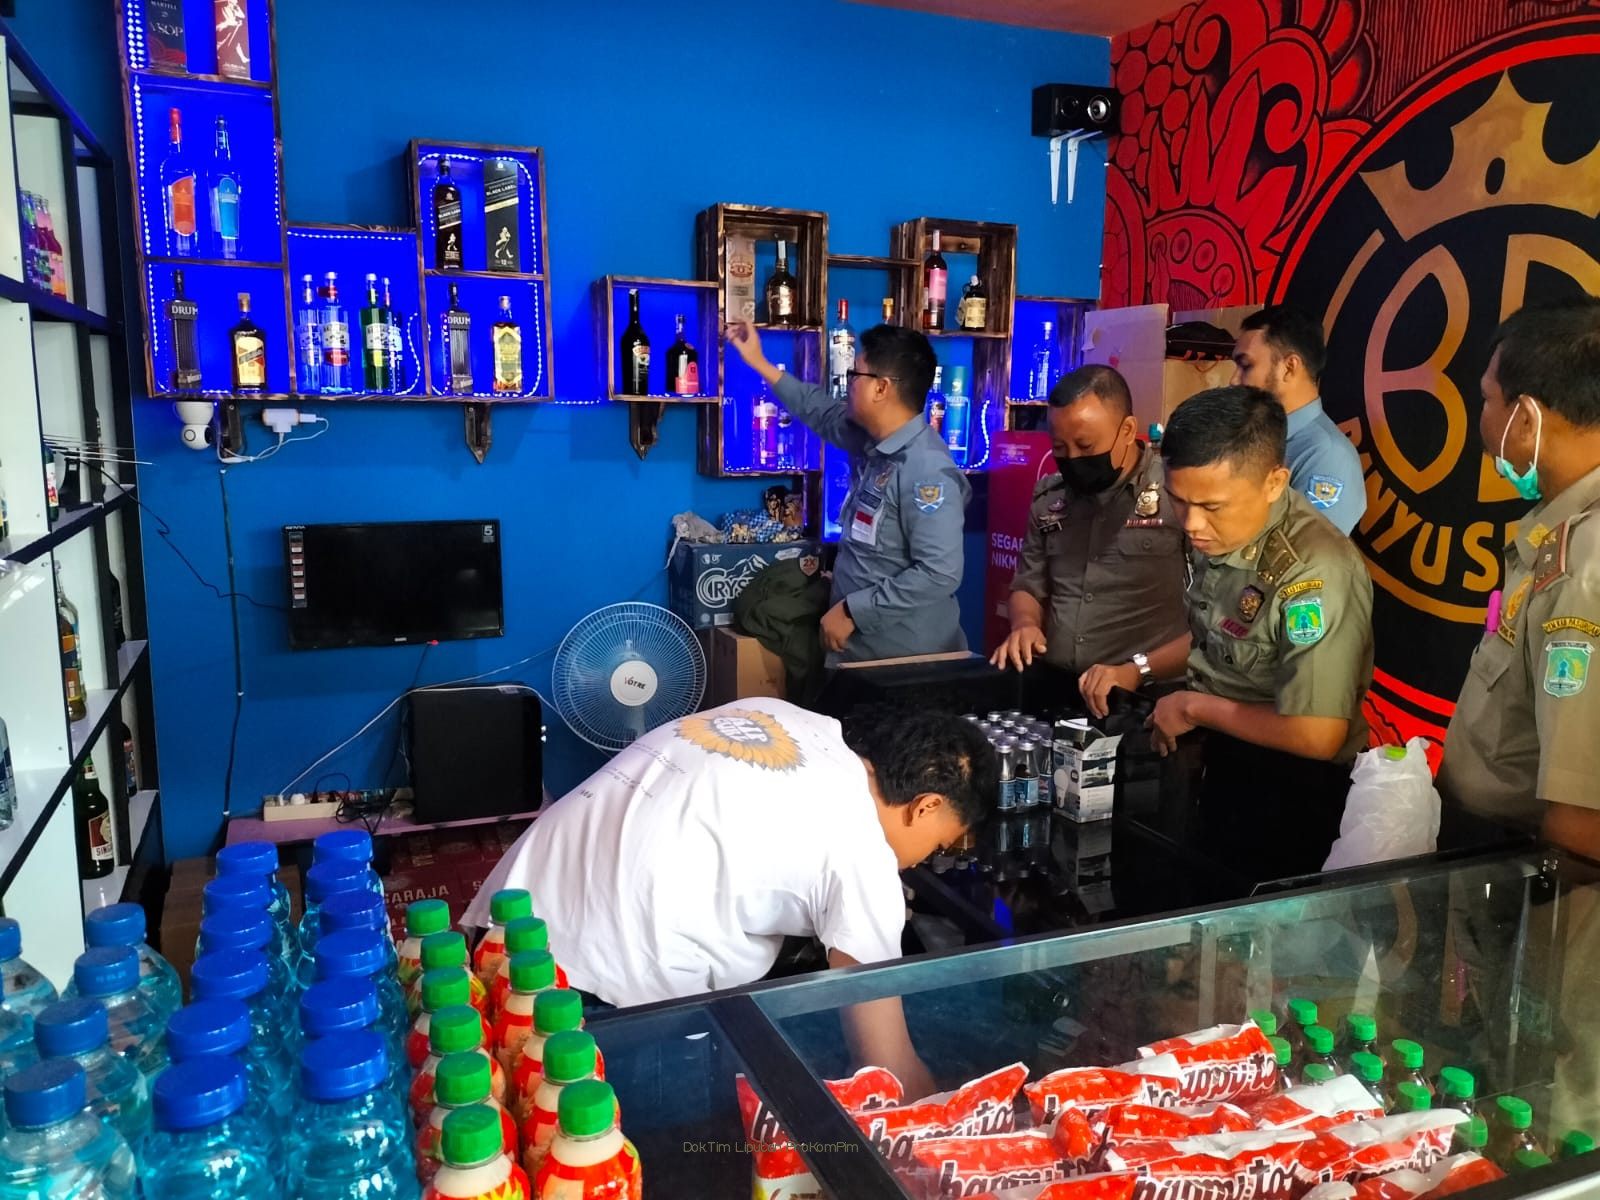 Jual Vulgar di Depan Kantor Kecamatan, Satpol PP Amankan Ratusan Botol Minol